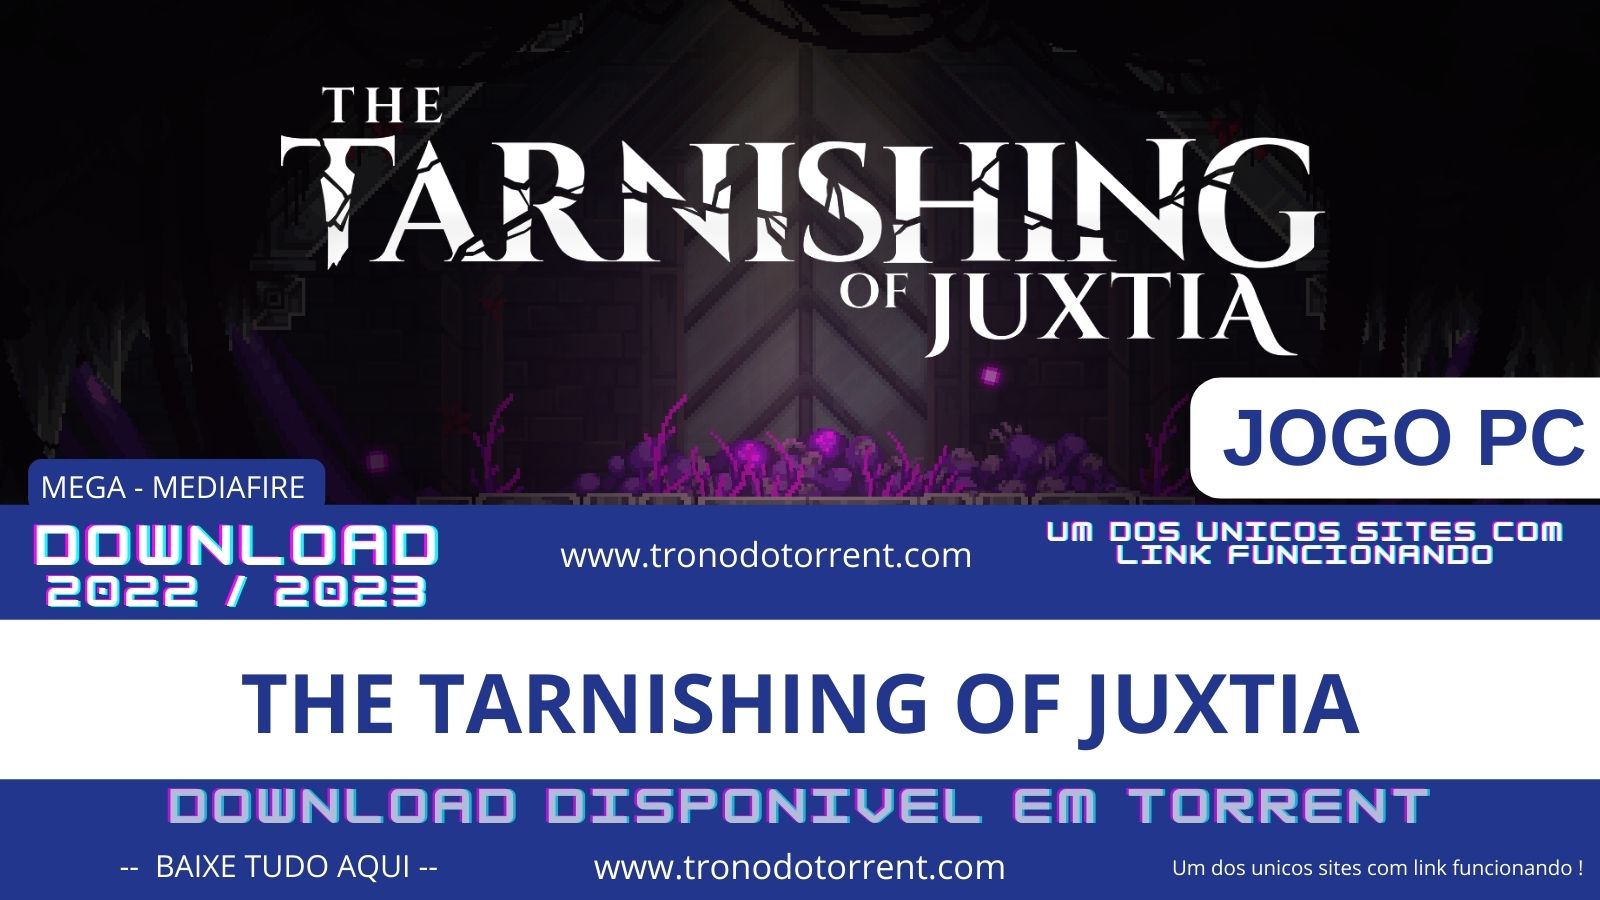 Baixe  The Tarnishing of Juxtia [ 2022 ] Torrent - MEGA E MEDIAFIRE - tronodotorrent.com